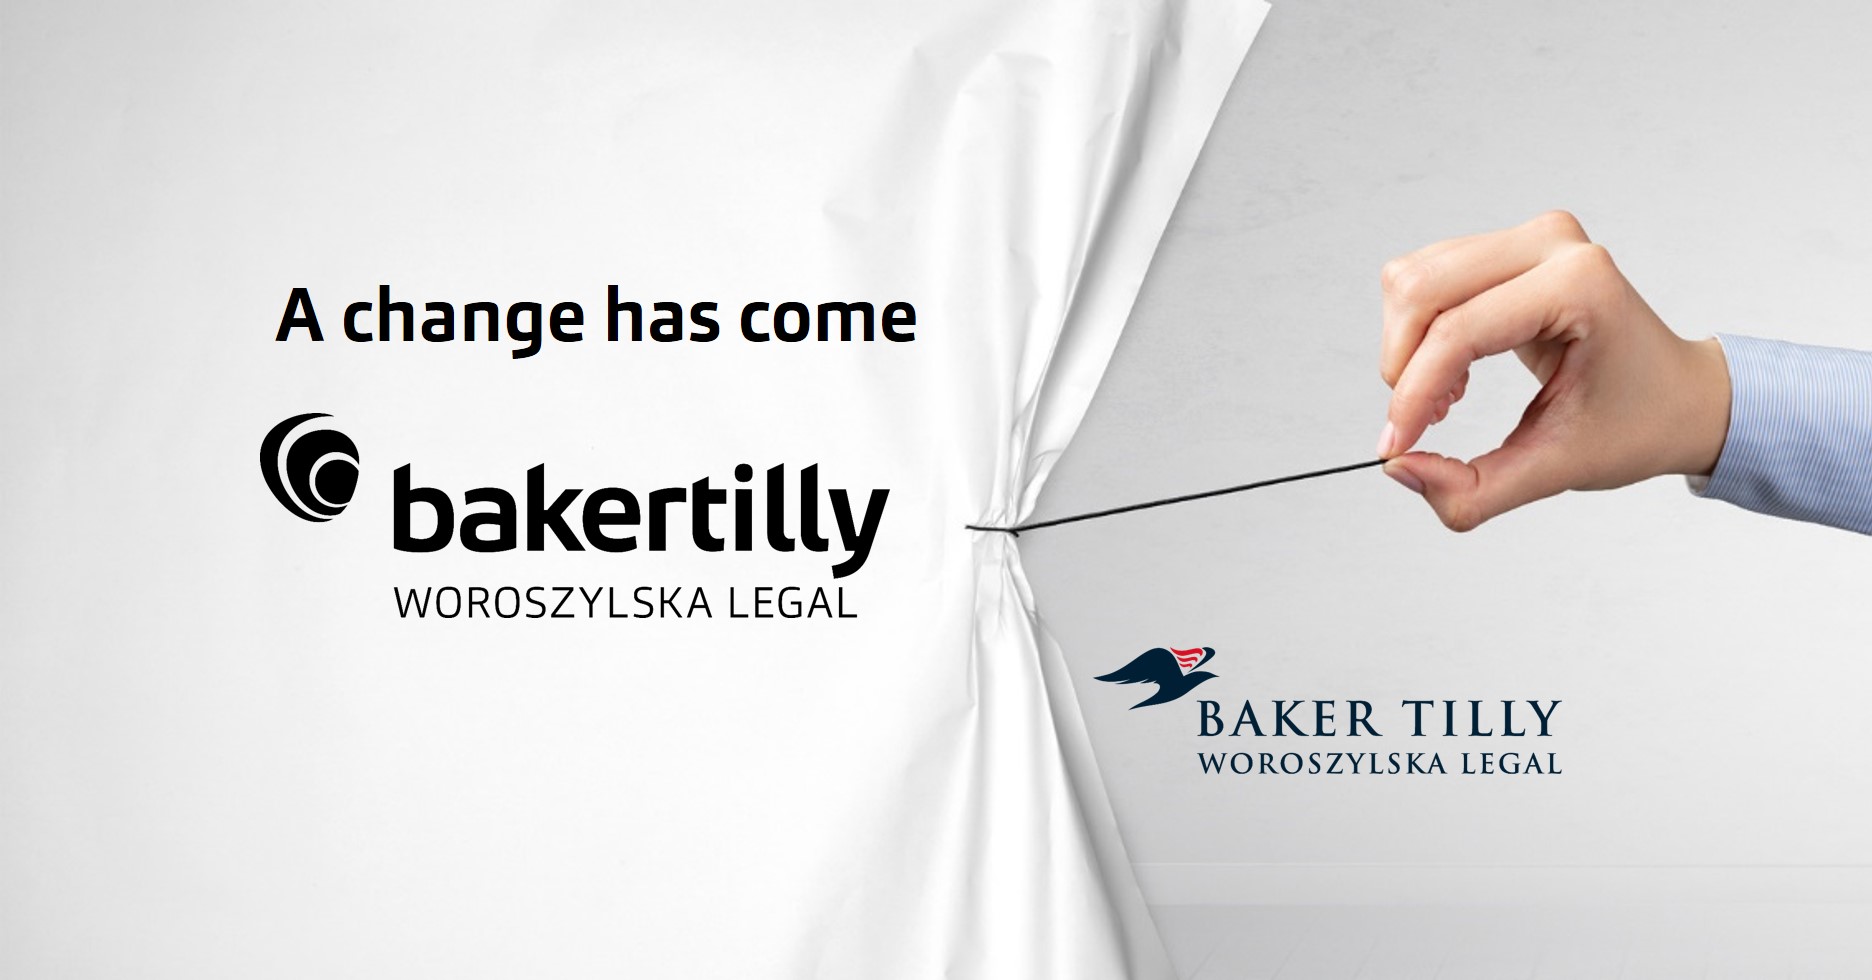 Baker Tilly Woroszylska Legal z nowym logo